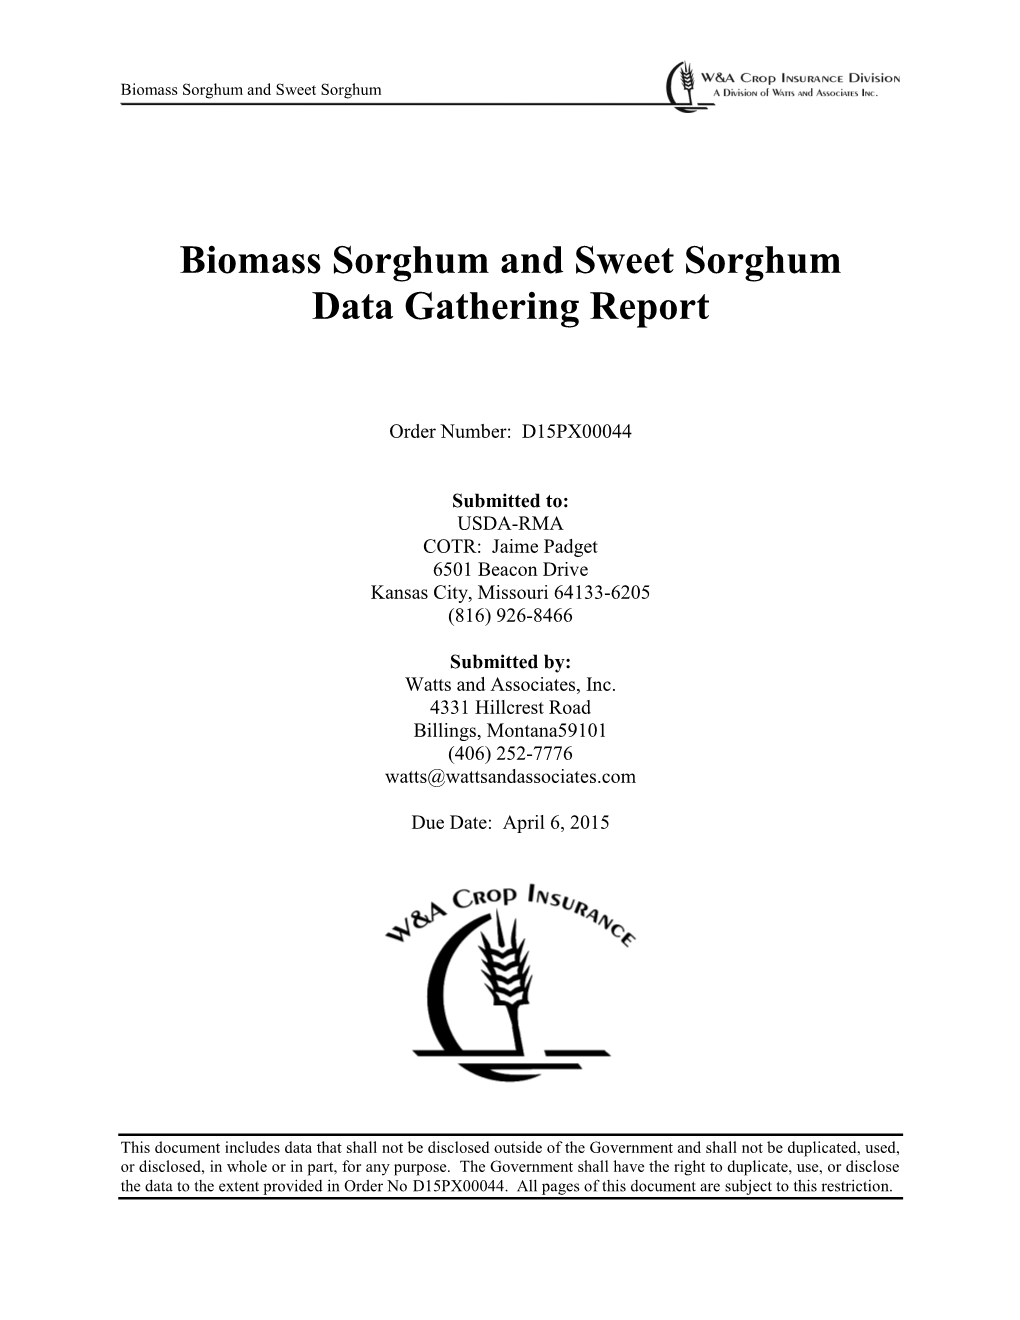 Biomass Sorghum and Sweet Sorghum Data Gathering Report